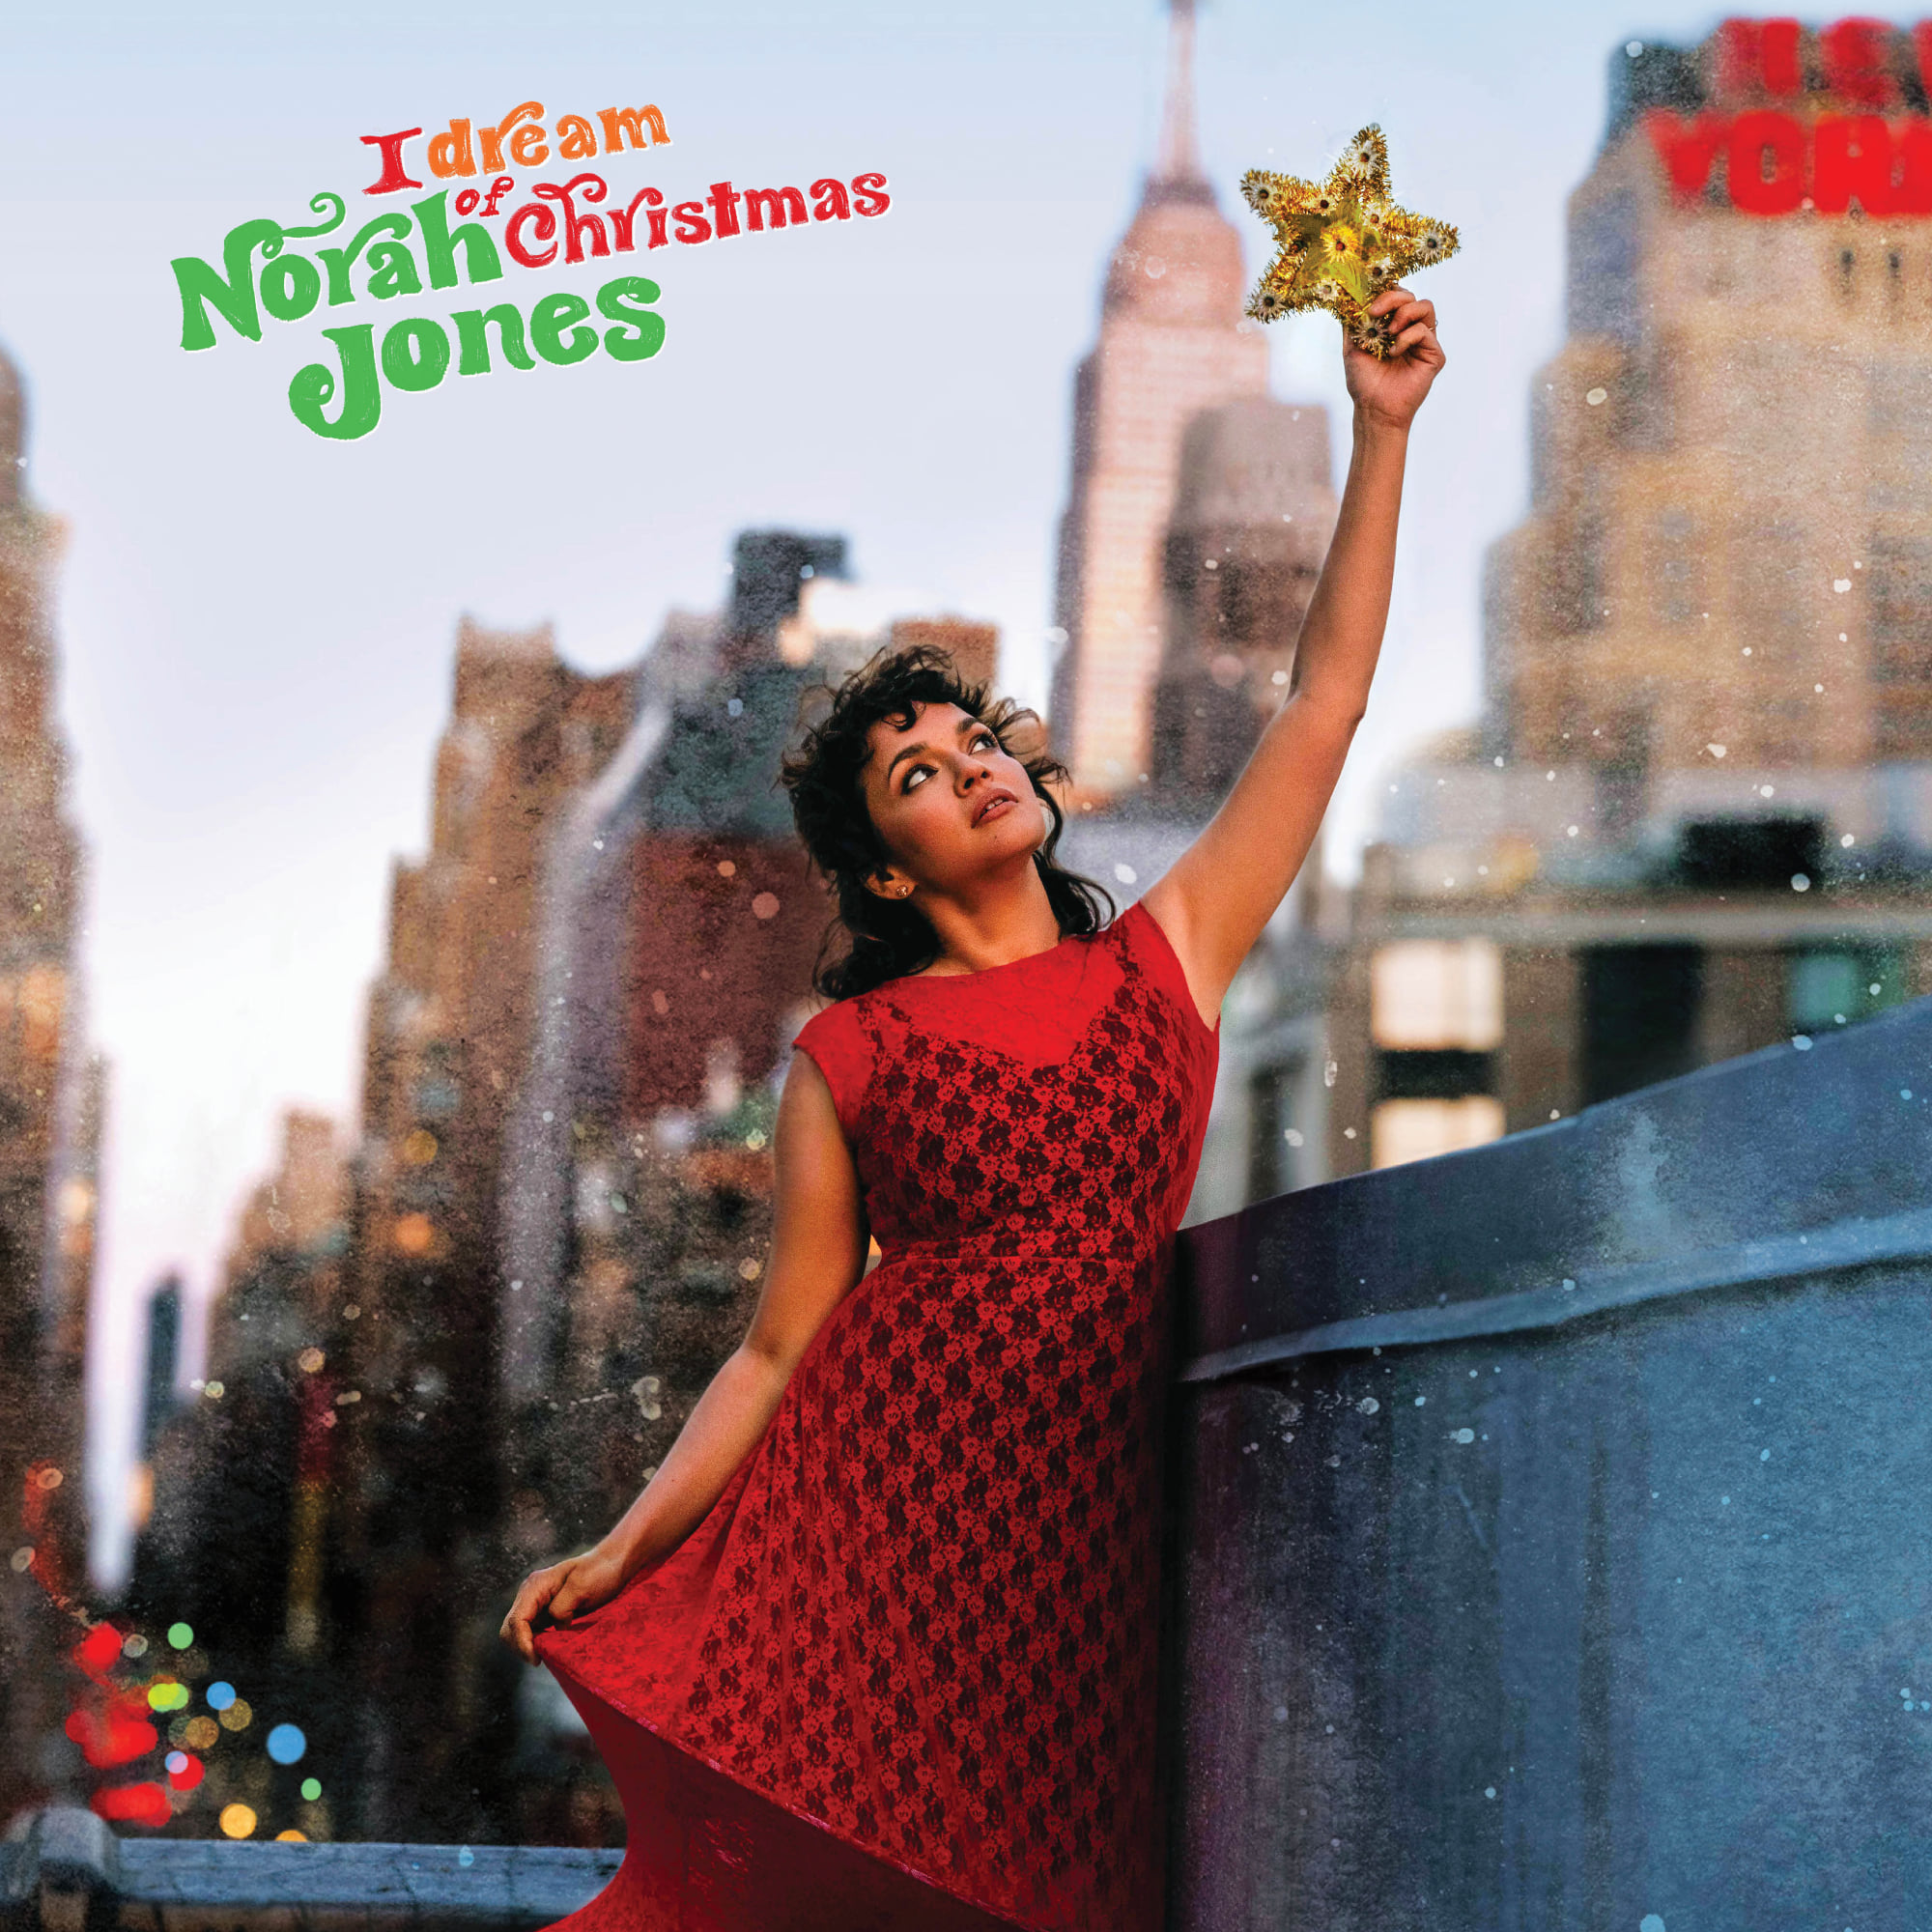 Norah Jones album deluxe I Dream Of Christmas